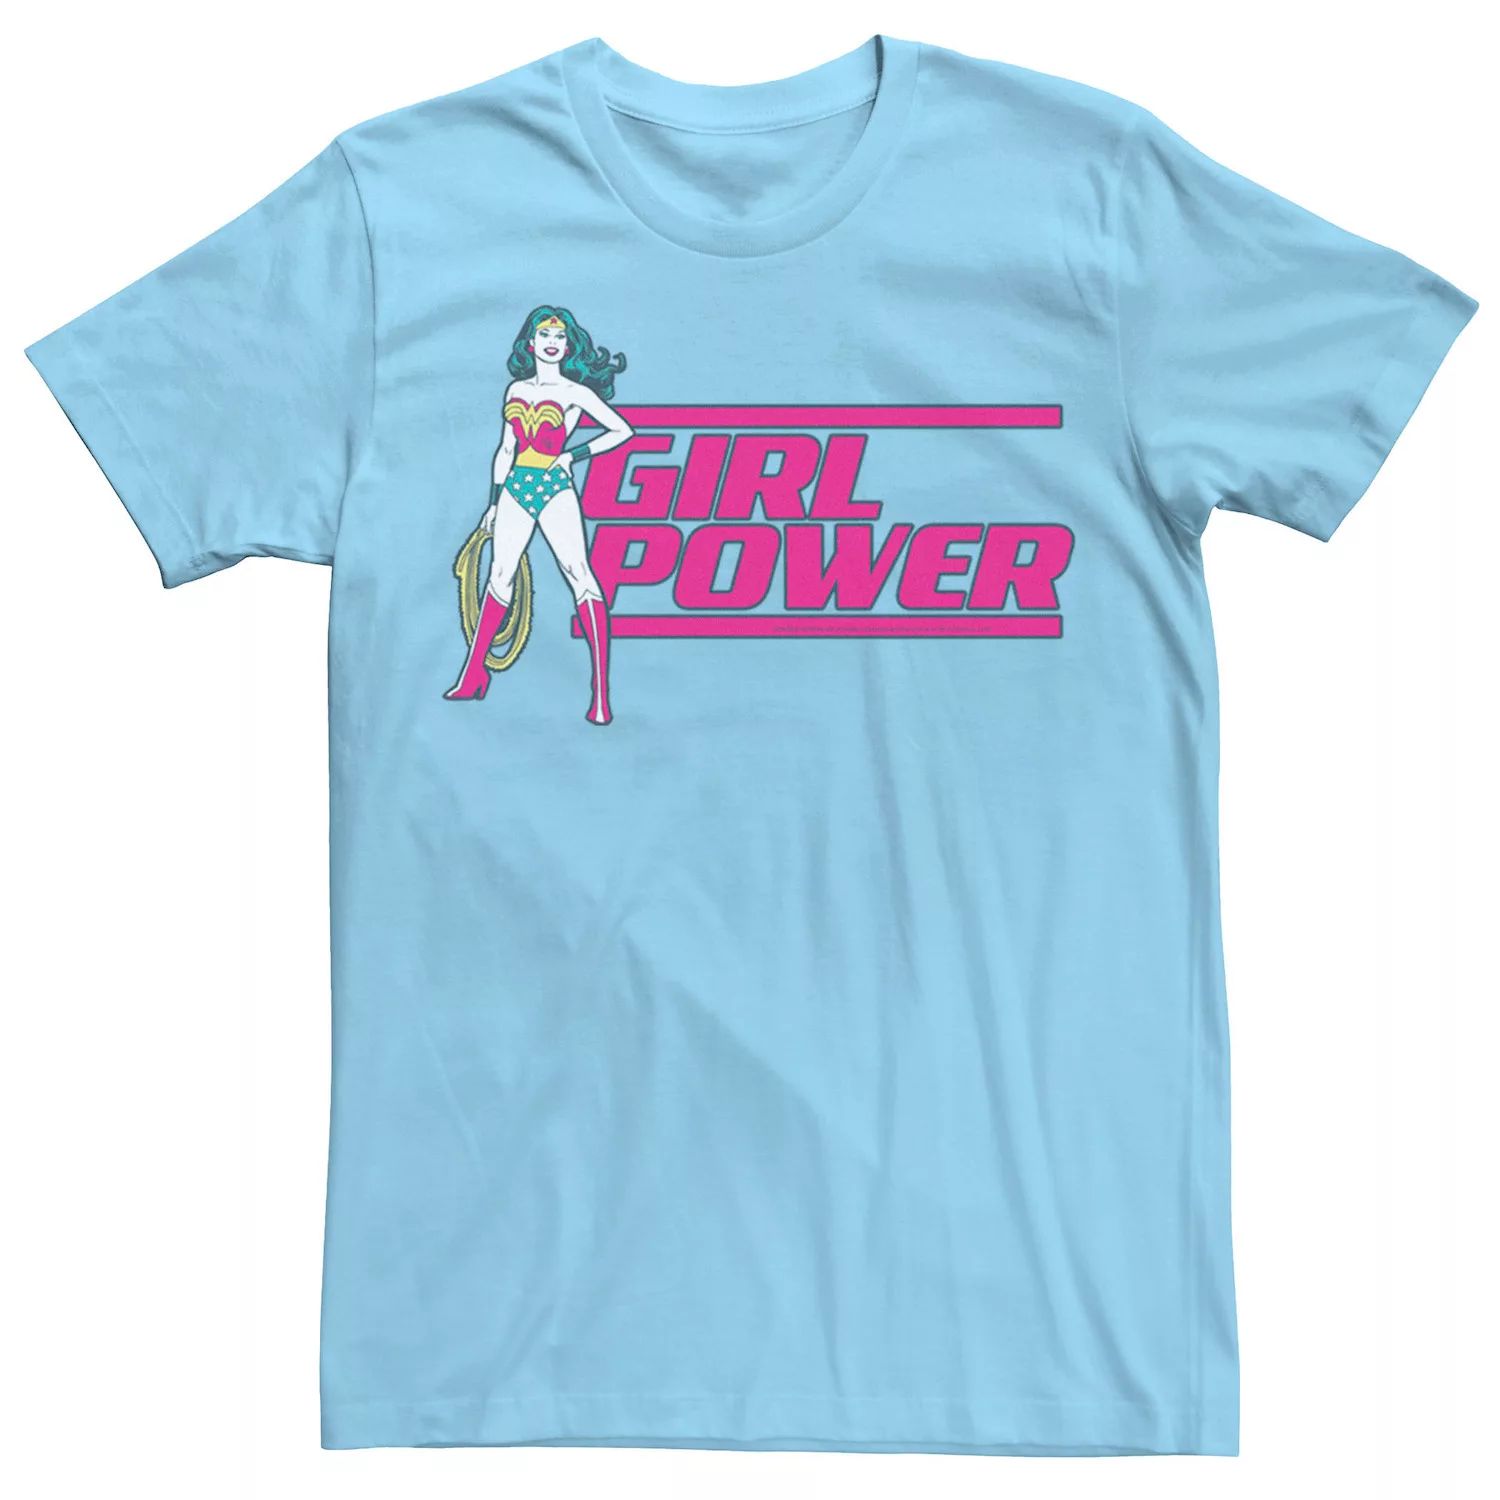 Мужская футболка Wonder Woman Girl Power Lasso с текстовым плакатом DC Comics